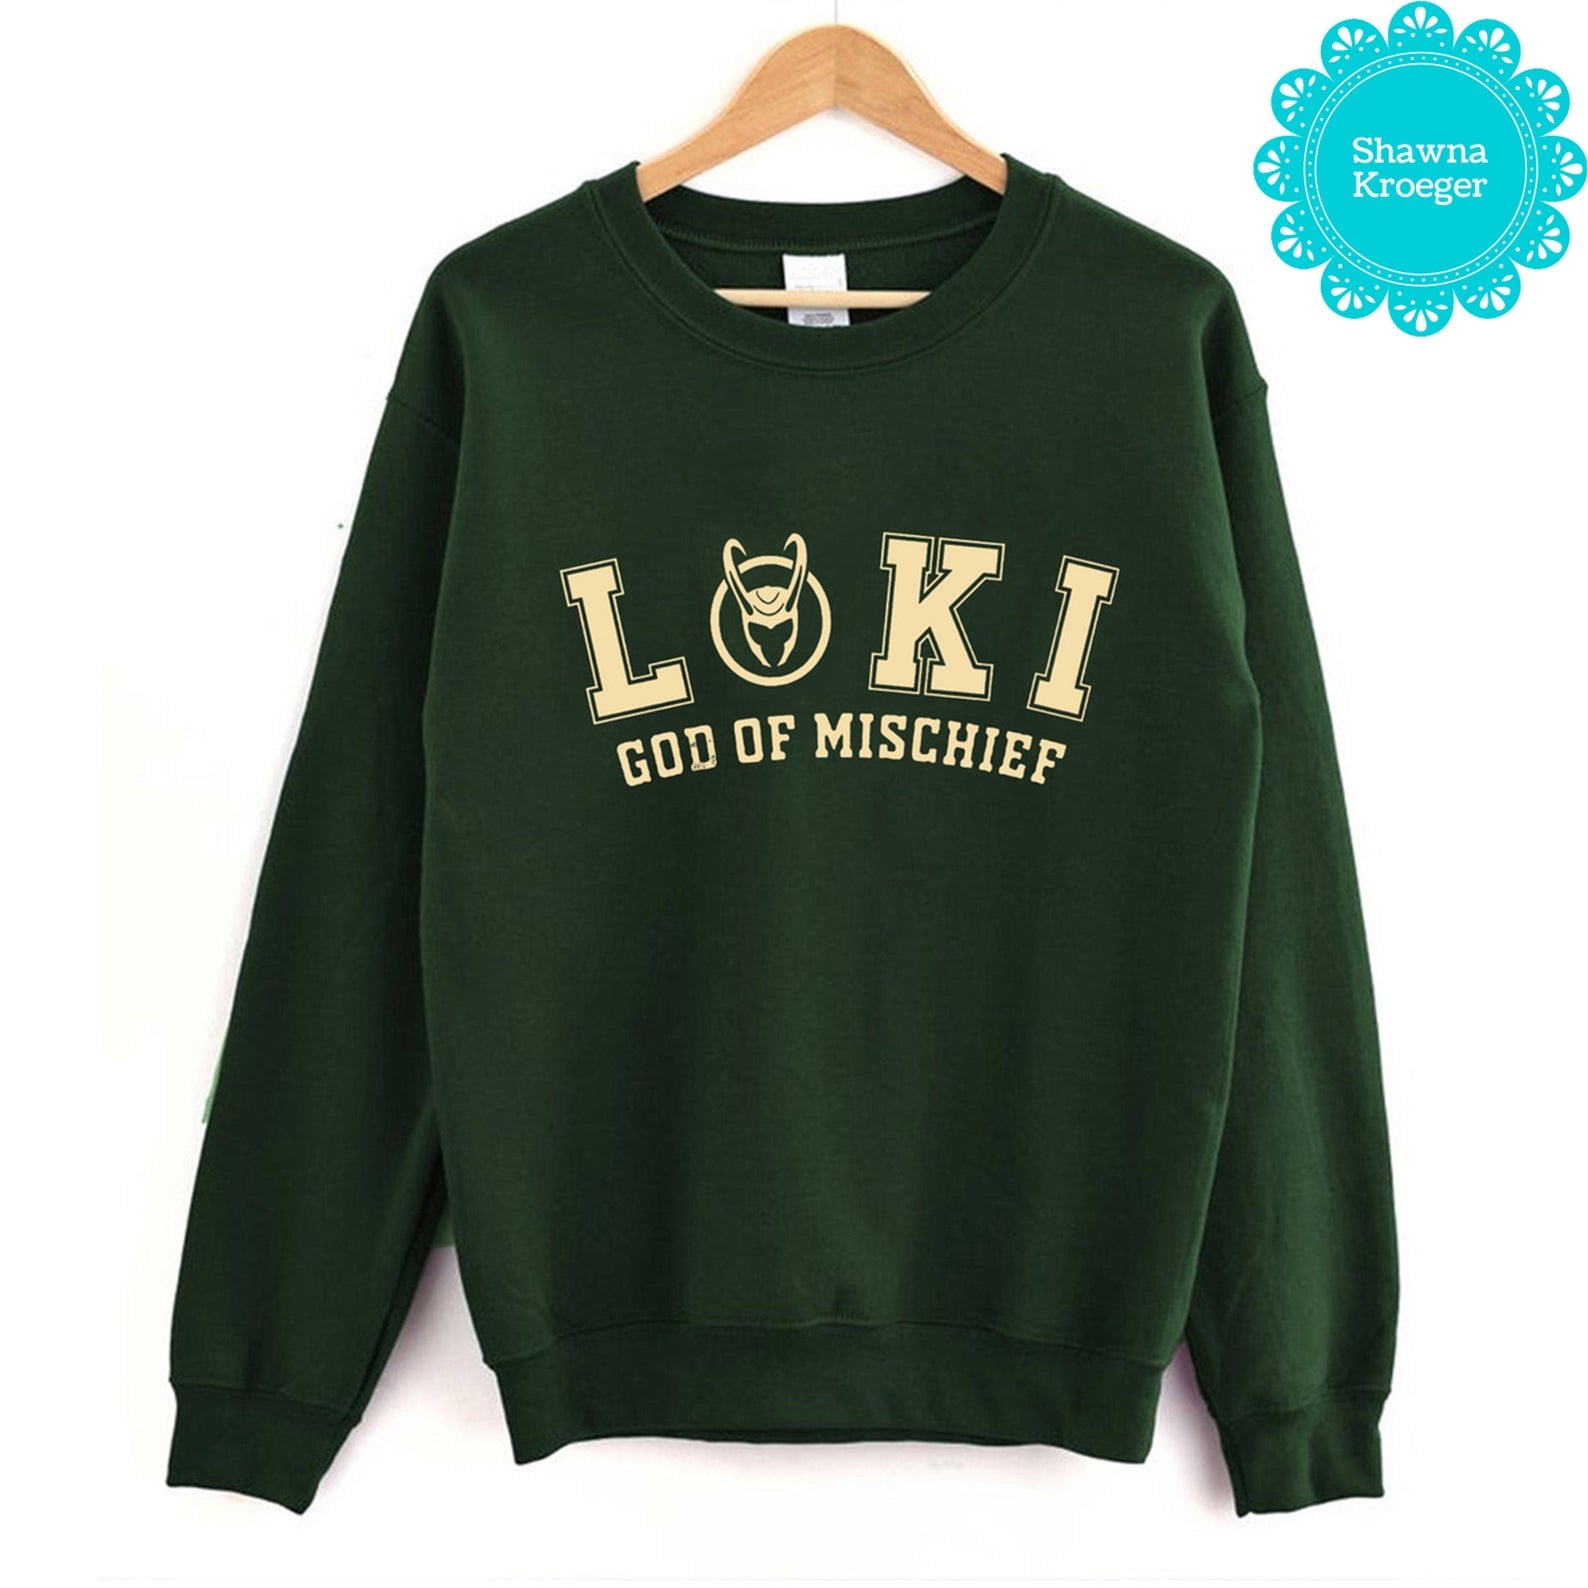 Loki Avengers Tv Series God of Mischief Sweatshirt All Sizes and Color S Loki and Lady Loki Sweatshirt 6XL Sweater